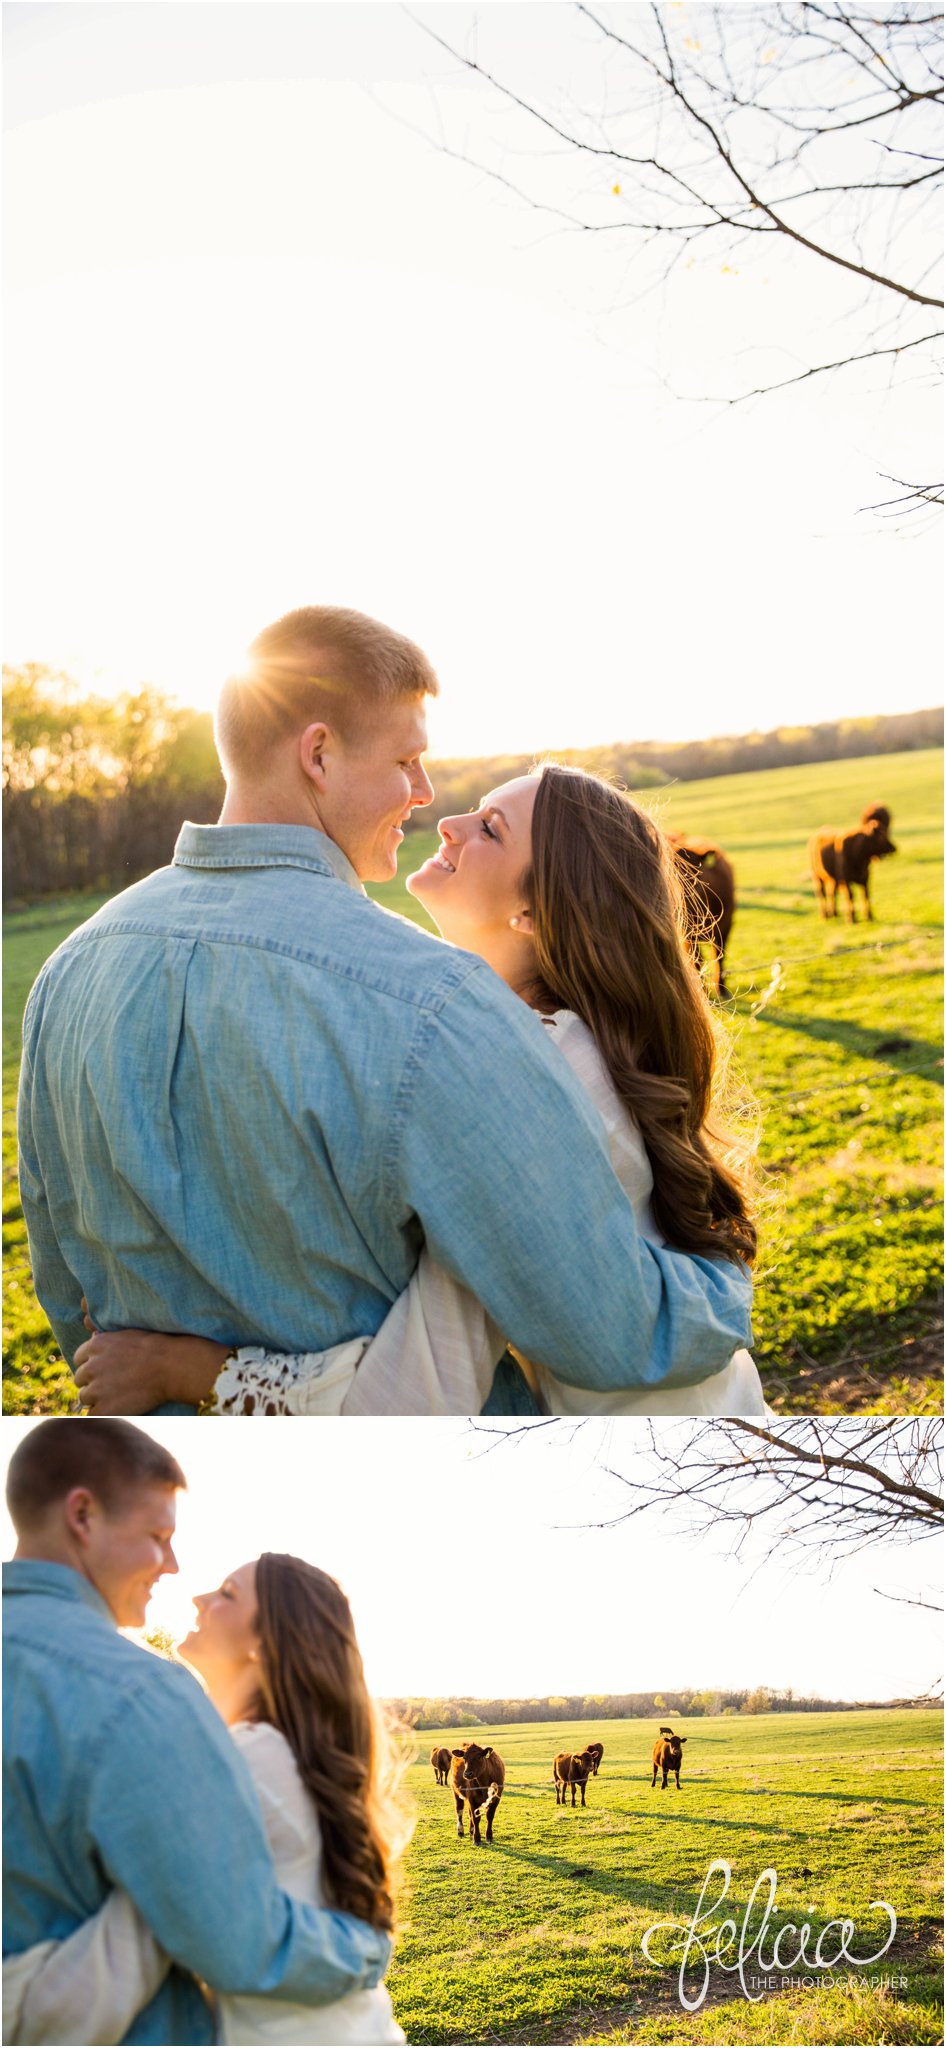 Kansas City Romantic Engagement Photos | Smithville Farm Photography | Images by www.feliciathephotographer.com